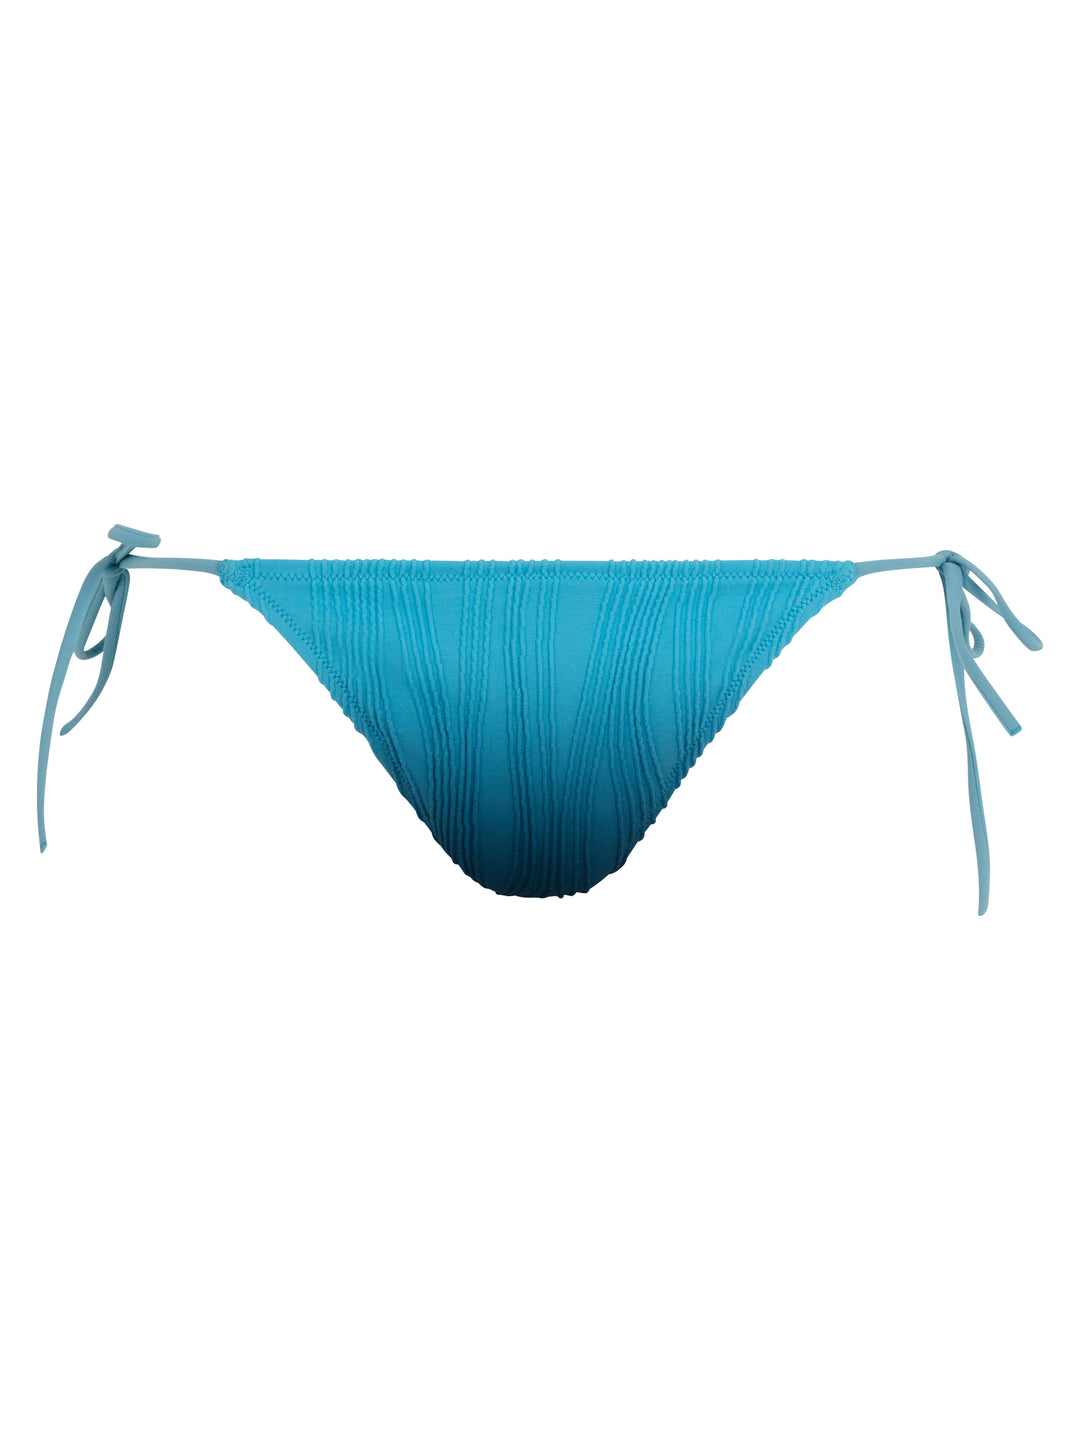 Chantelle Swimwear - Купальник одного размера, синий с завязкой и краской